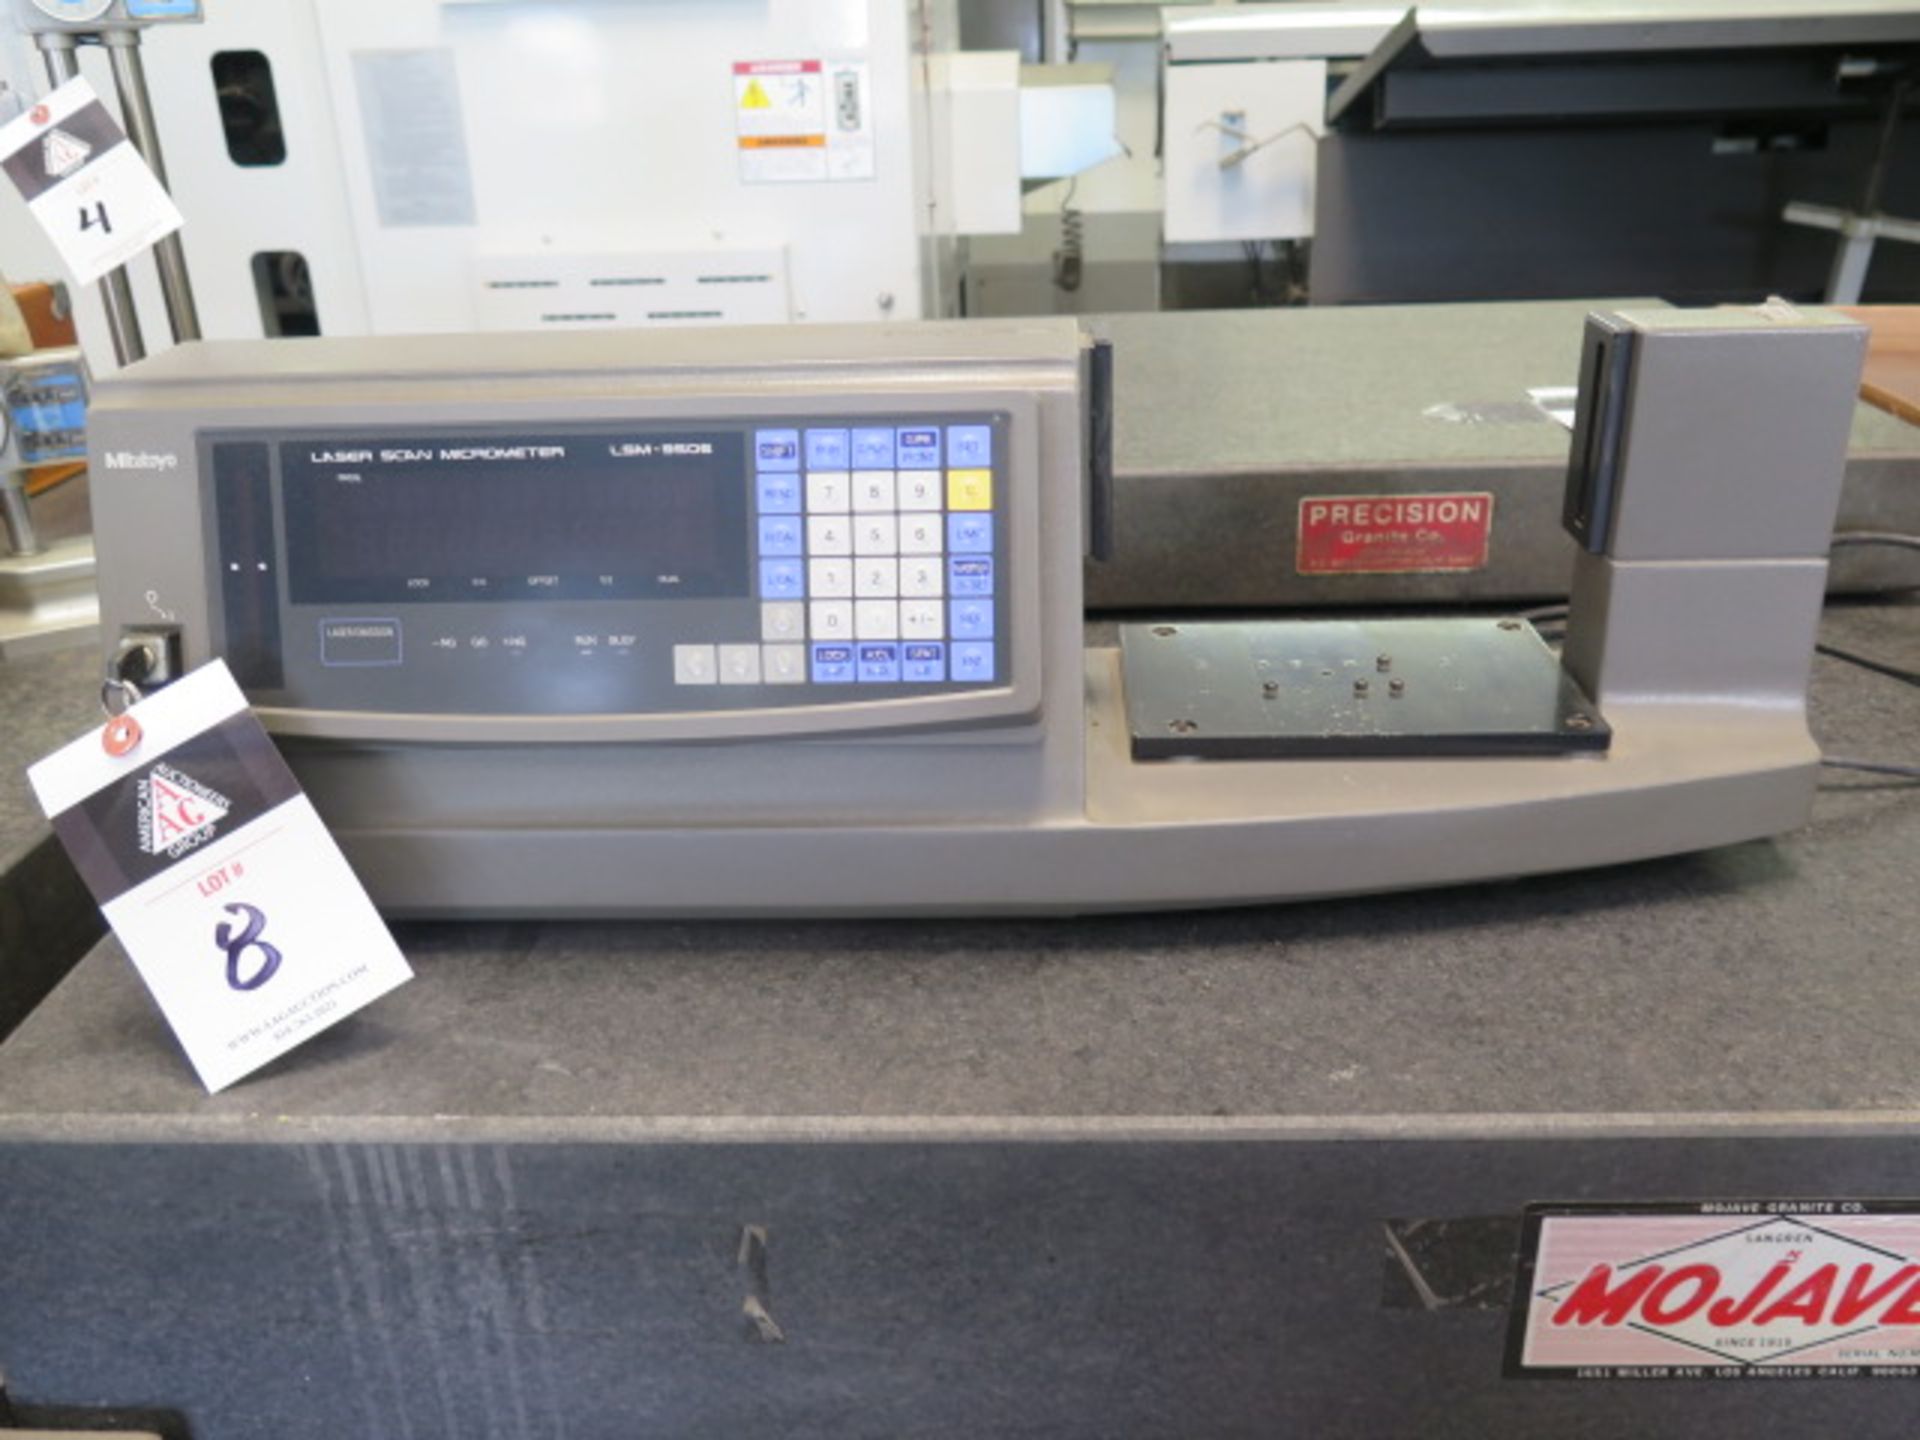 Mitutoyo LSM-9506 mdl. 544-116-1A Laser Scan Mictometer s/n 402108 (SOLD AS-IS - NO WARRANTY)